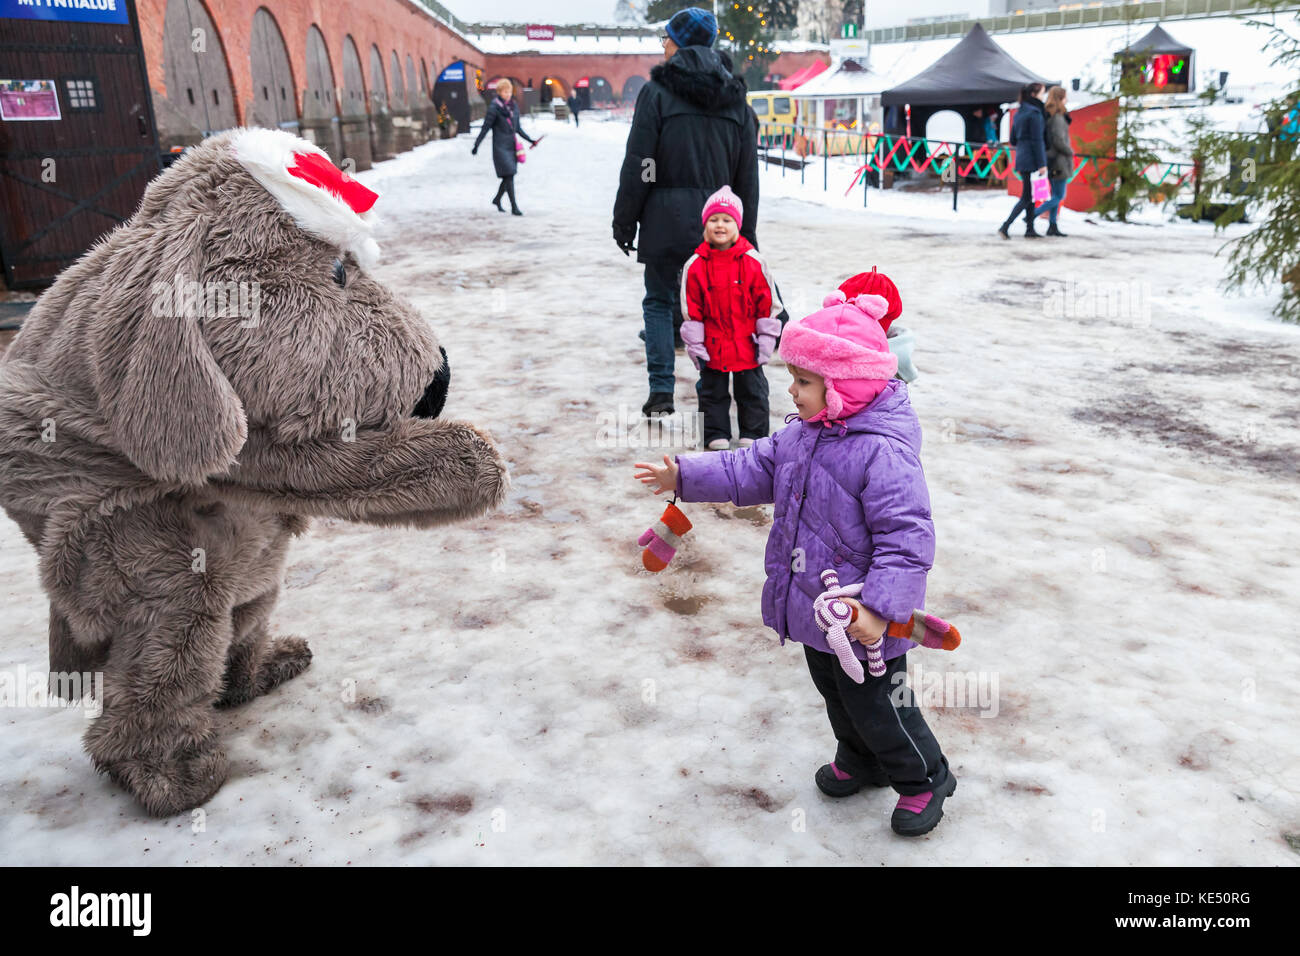 Hamina, Finland - December 13, 2014: Christmas fair in Hamina bastion, animators in animal costumes dance with children Stock Photo